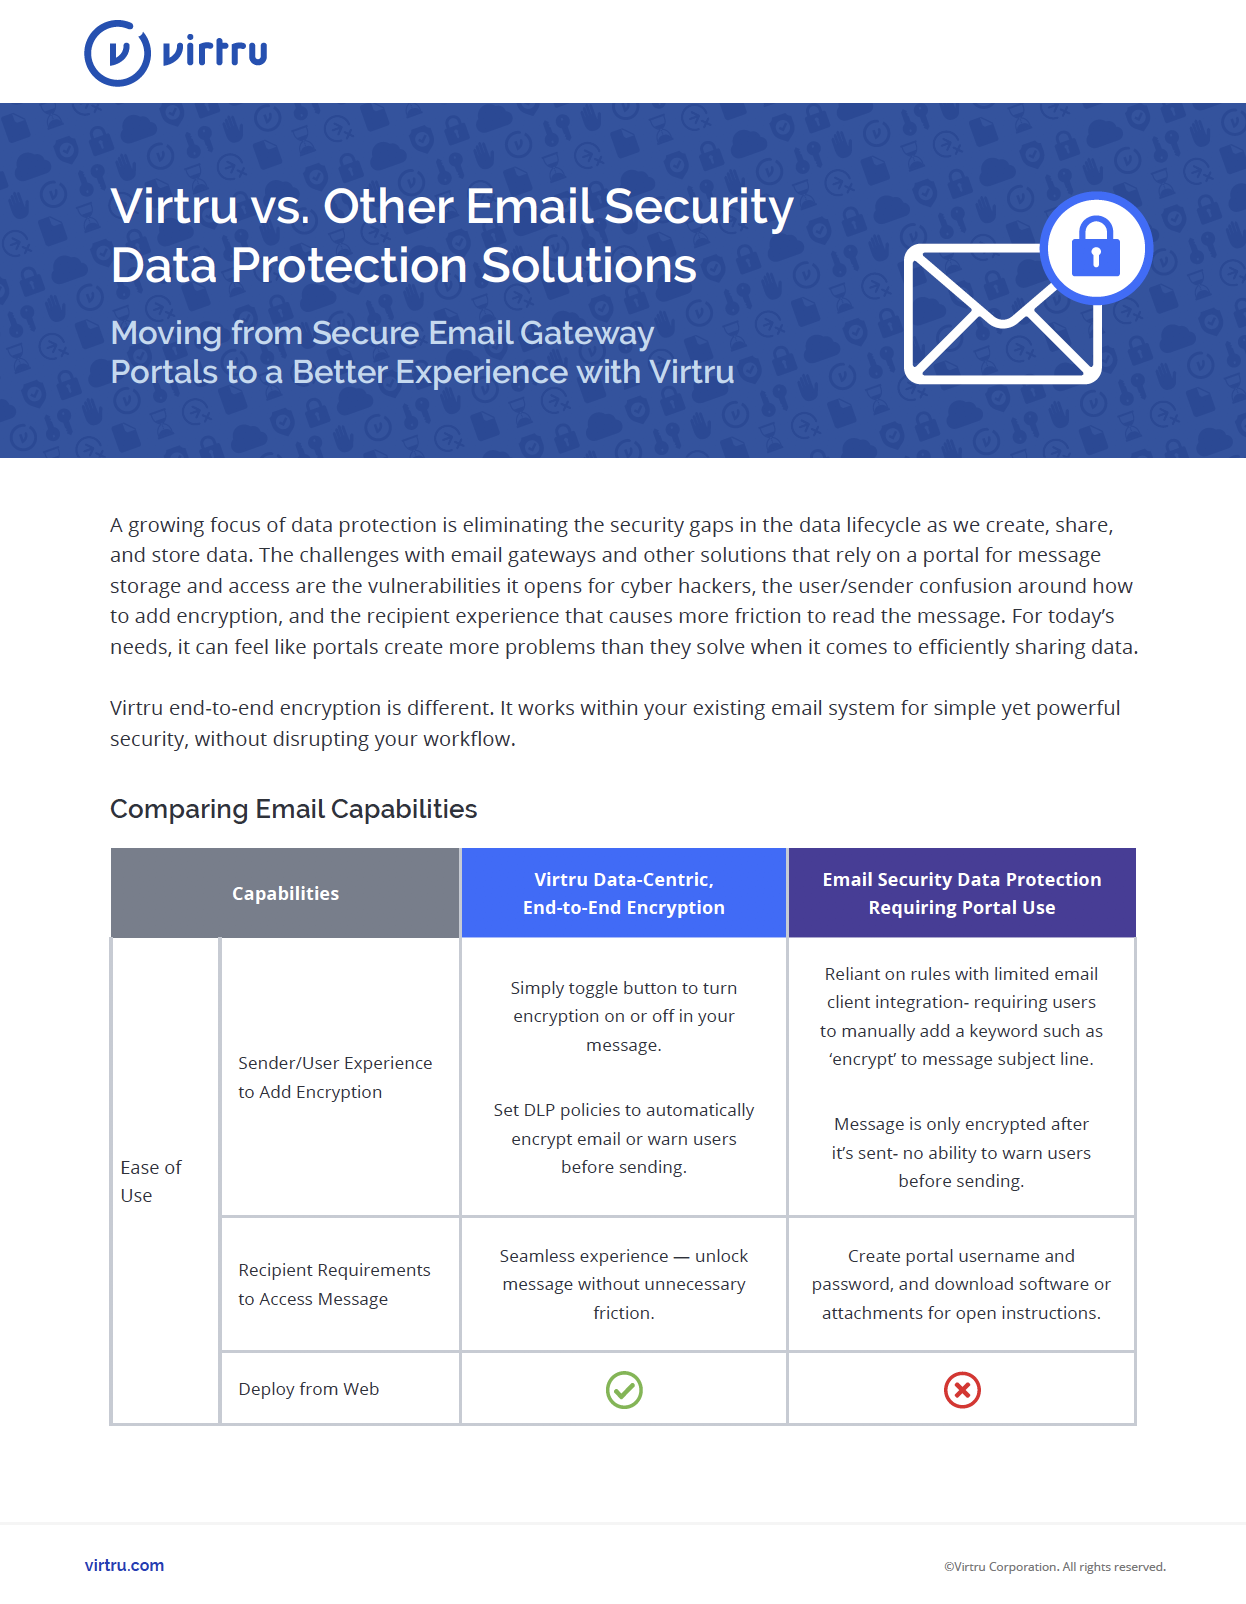 Virtru vs Other Email Security Solutions-ScreenShot